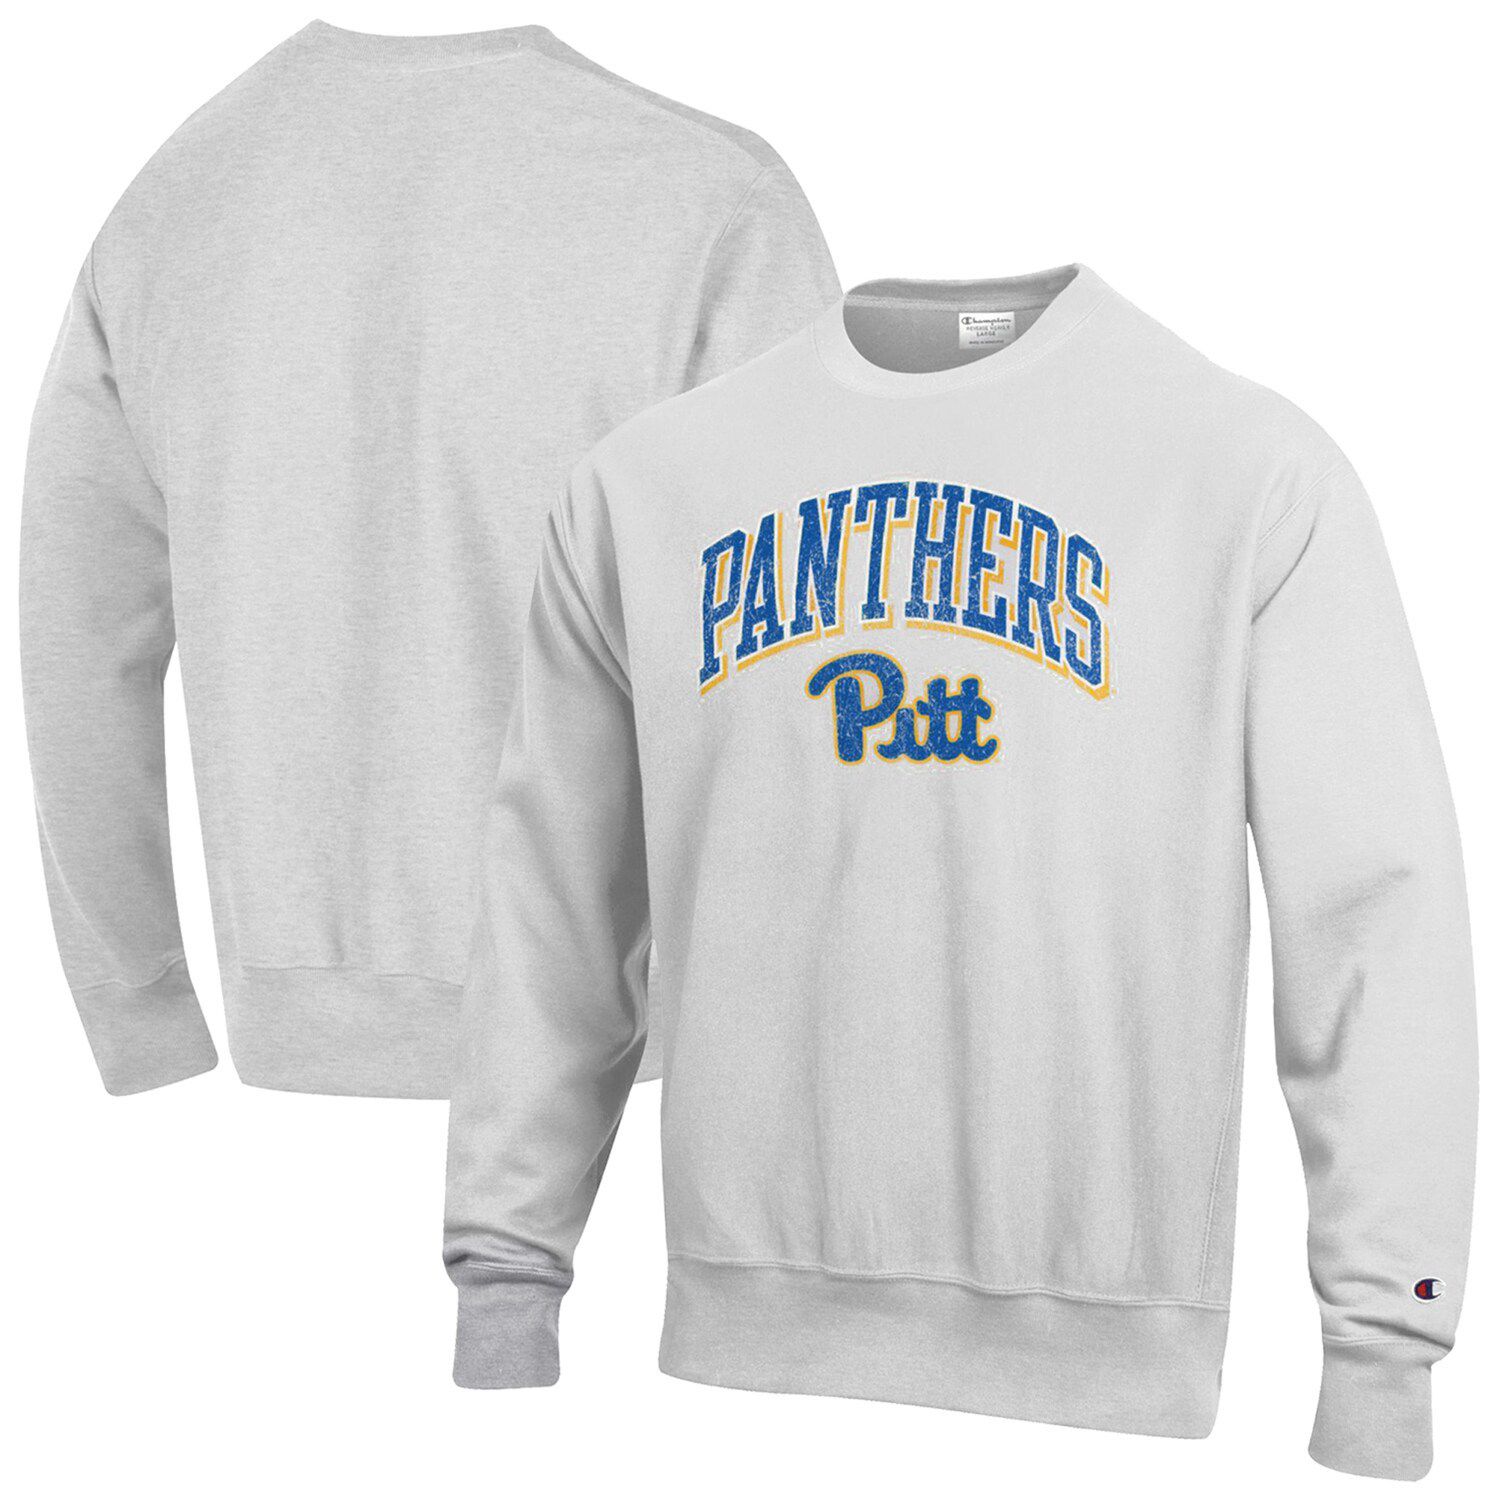 pitt panthers crewneck sweatshirt